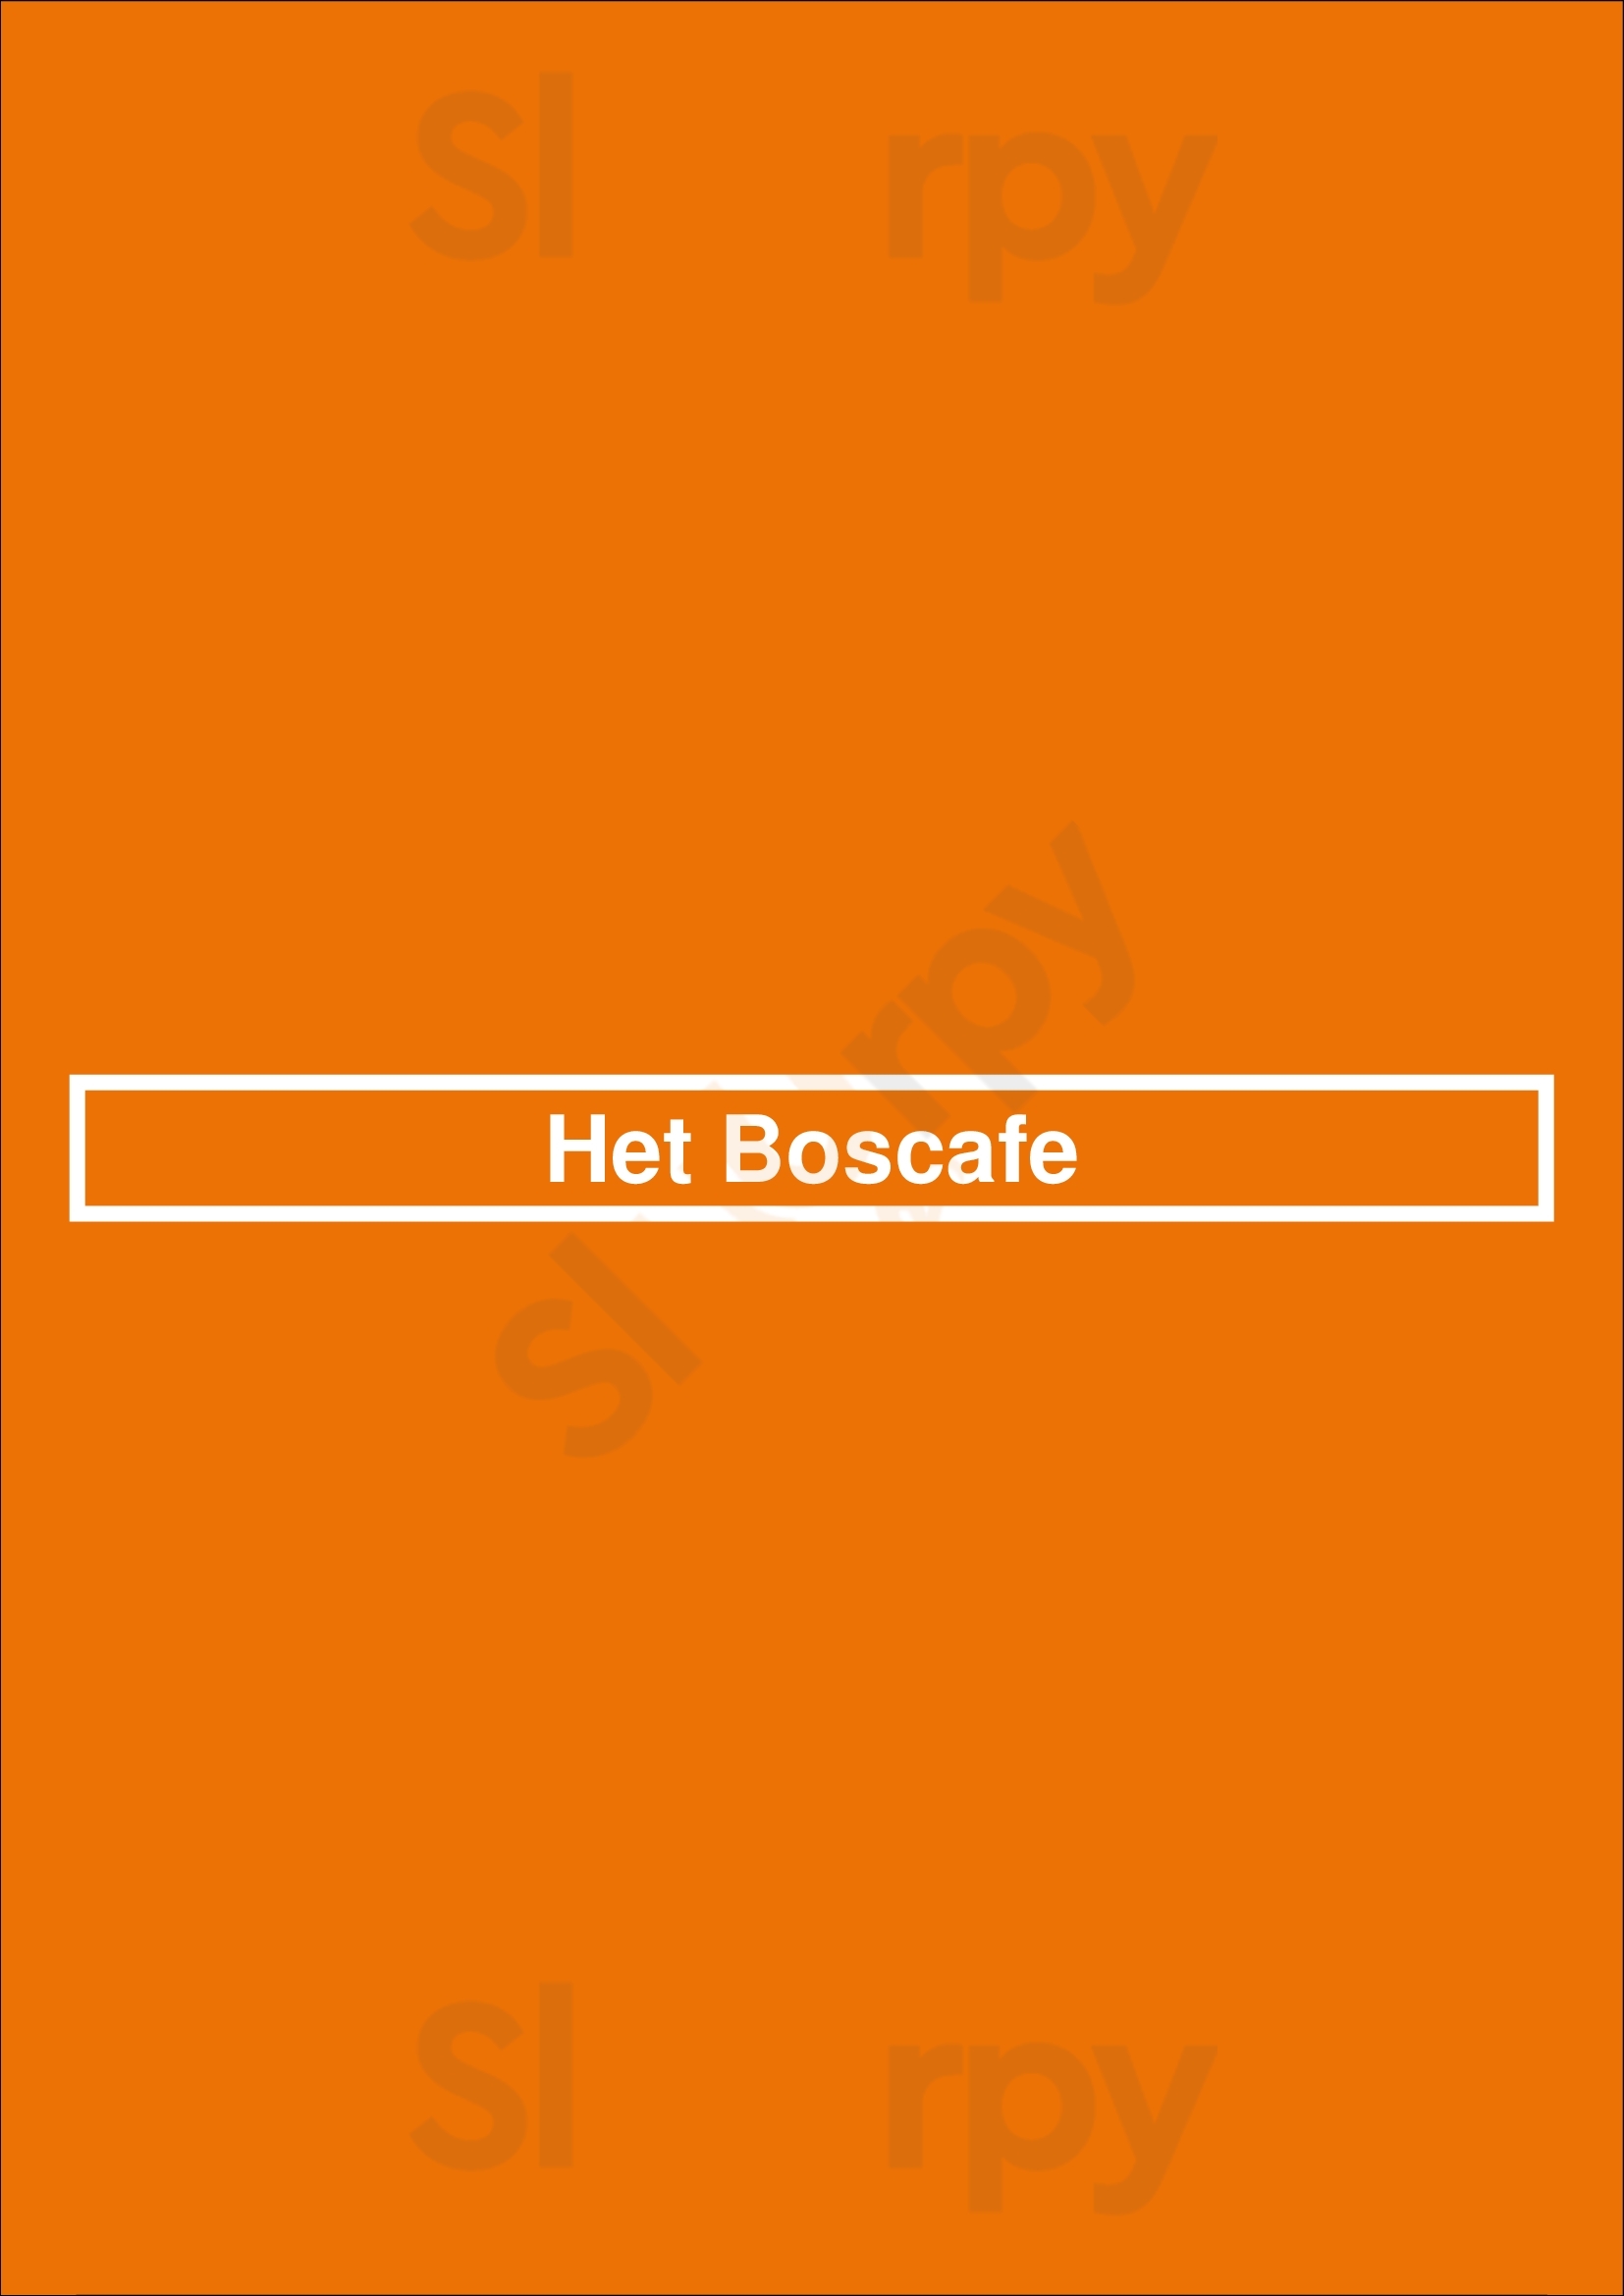 Het Boscafe Oisterwijk Menu - 1